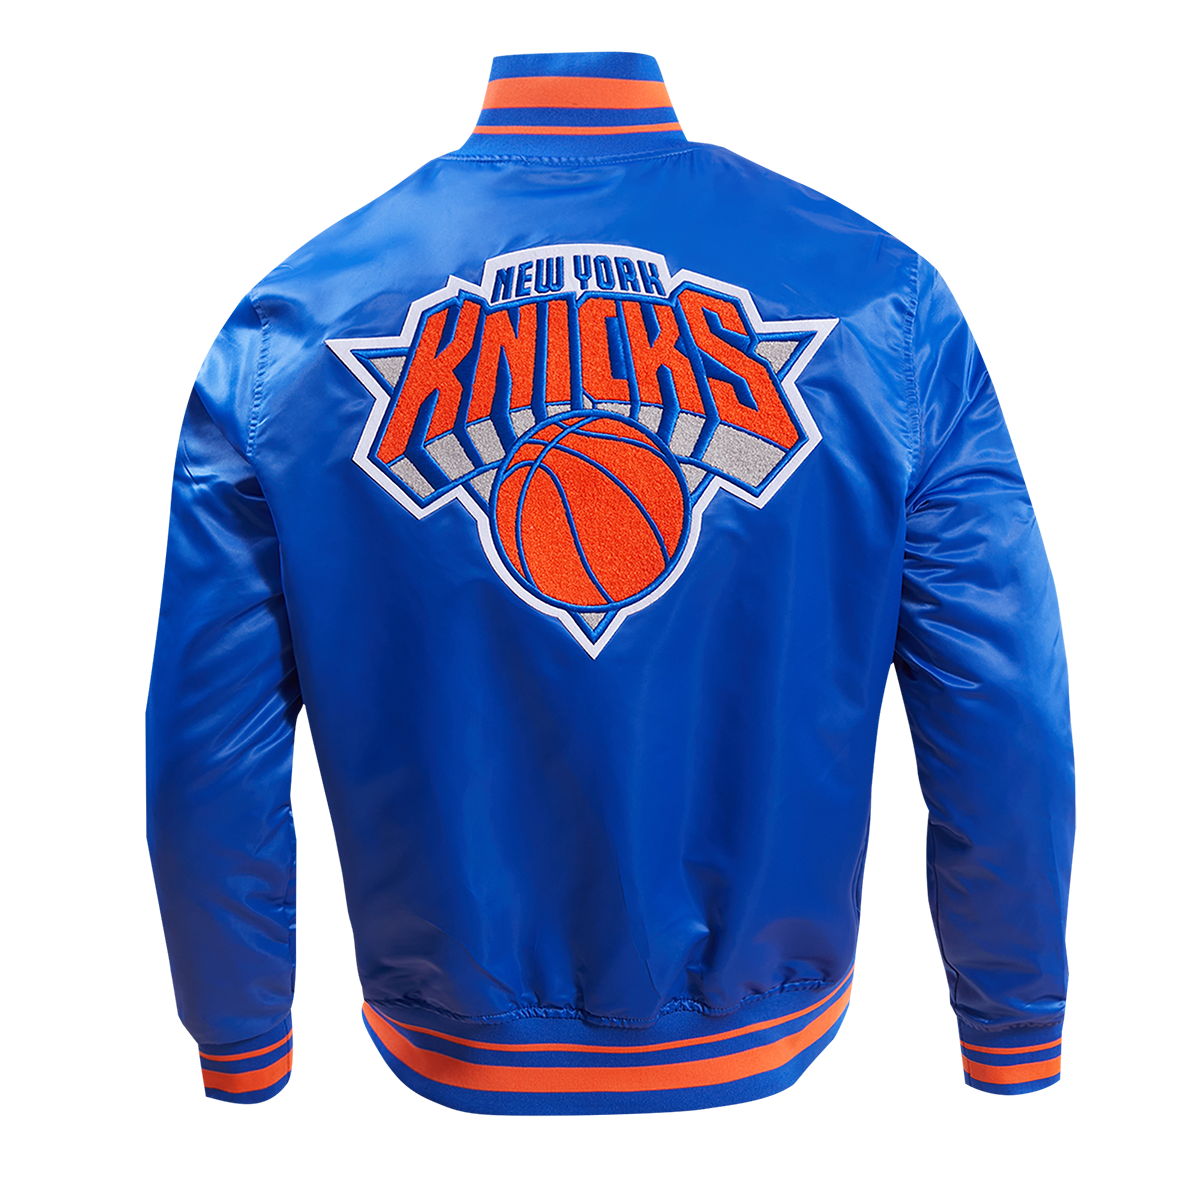 NBA NEW YORK KNICKS CLASSIC MEN'S PO HOODIE (ROYAL BLUE) – Pro